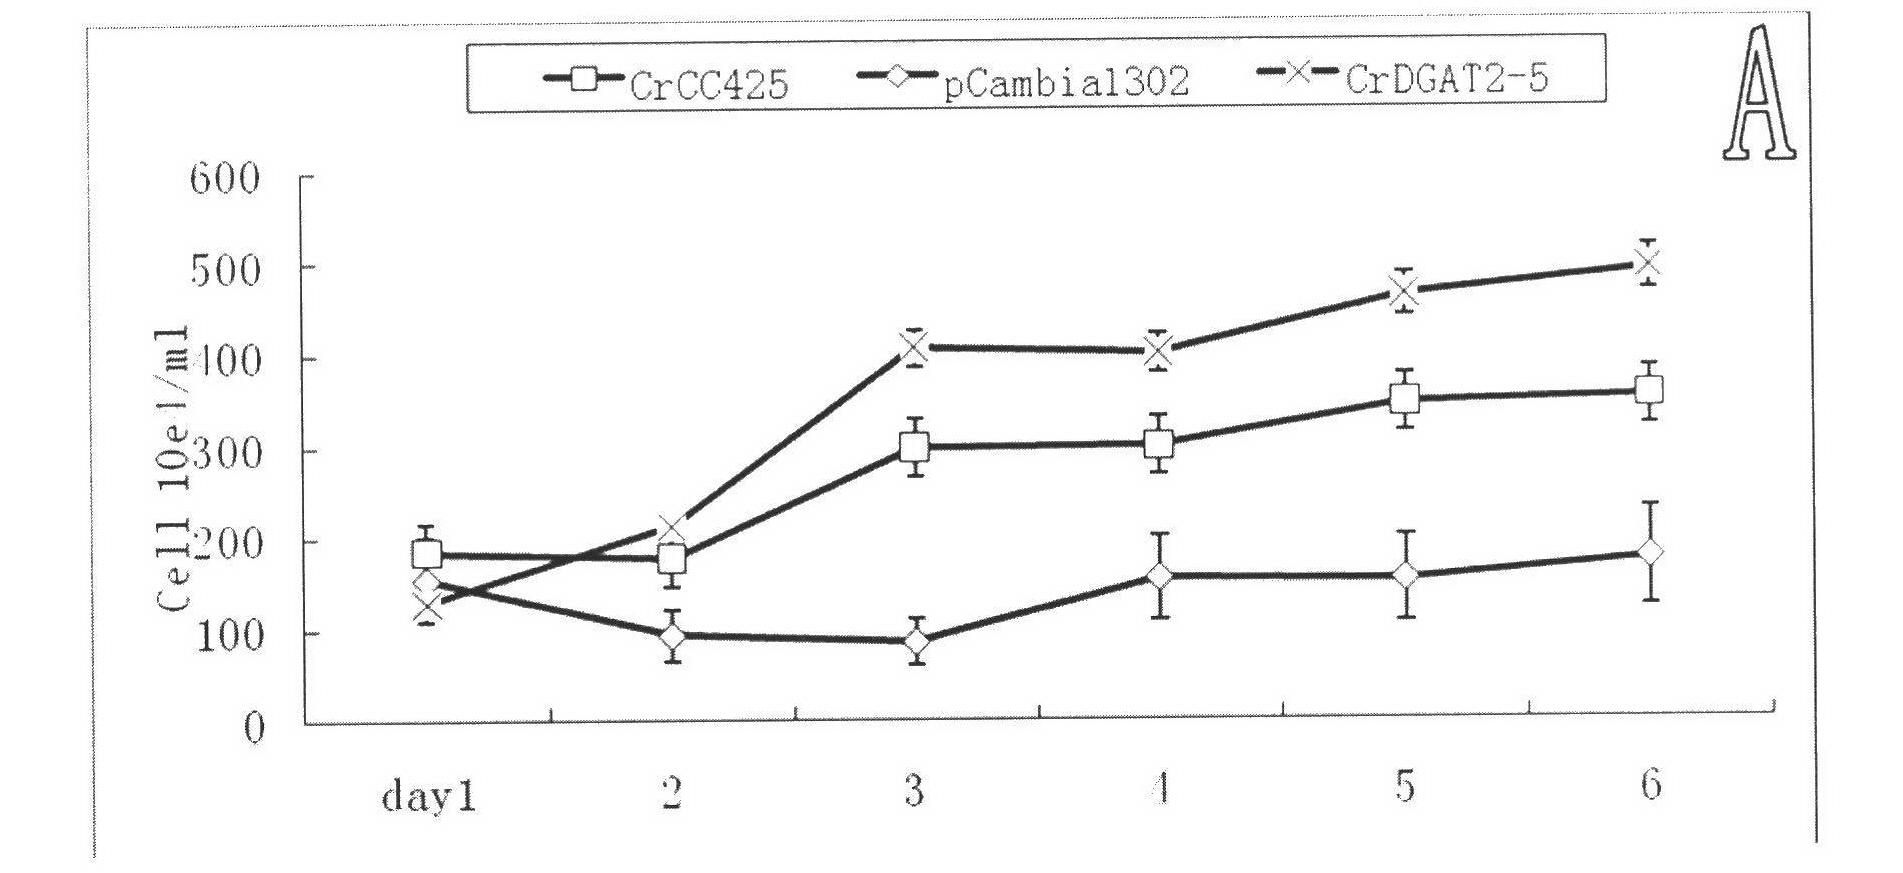 Chlamydomonas reinhardtii lipid metabolism gene CrDGAT2-5, encoding protein thereof, and application thereof